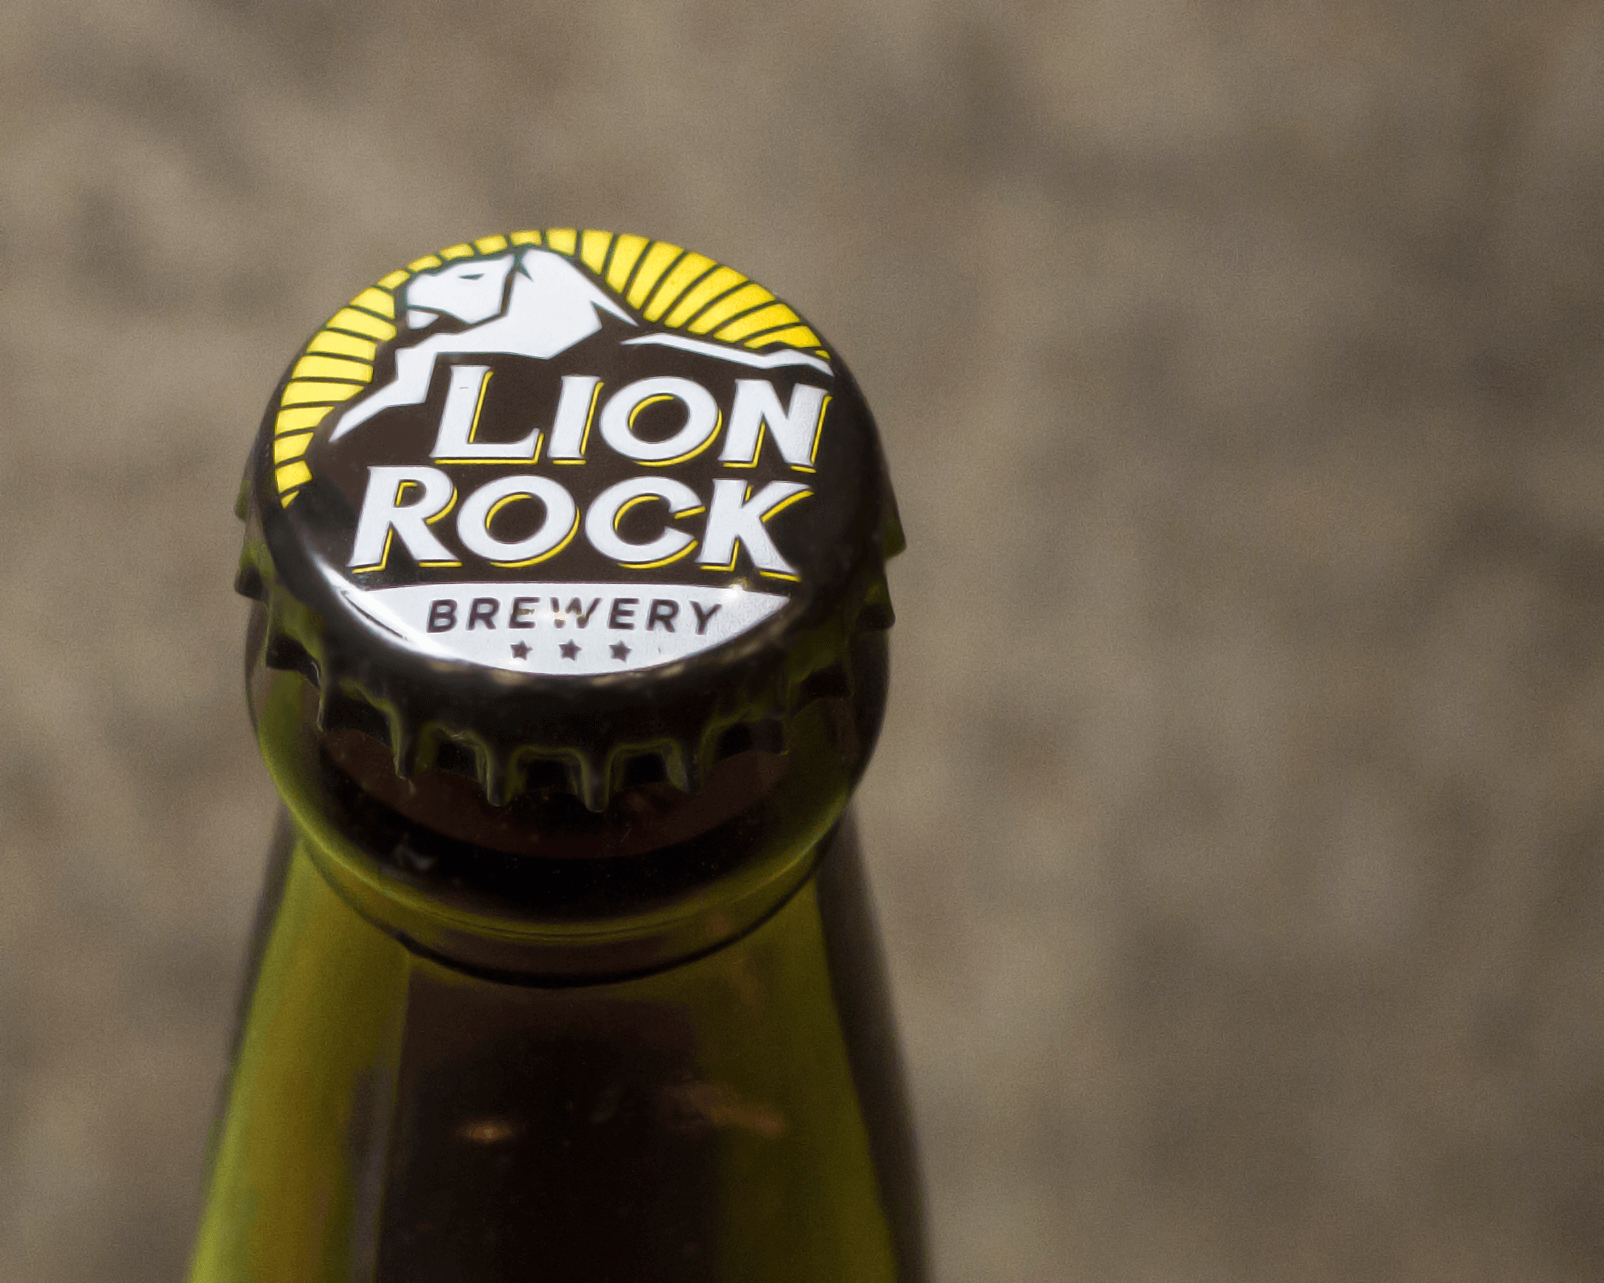 totalgroups branding hk lion rock brewery bottle cap